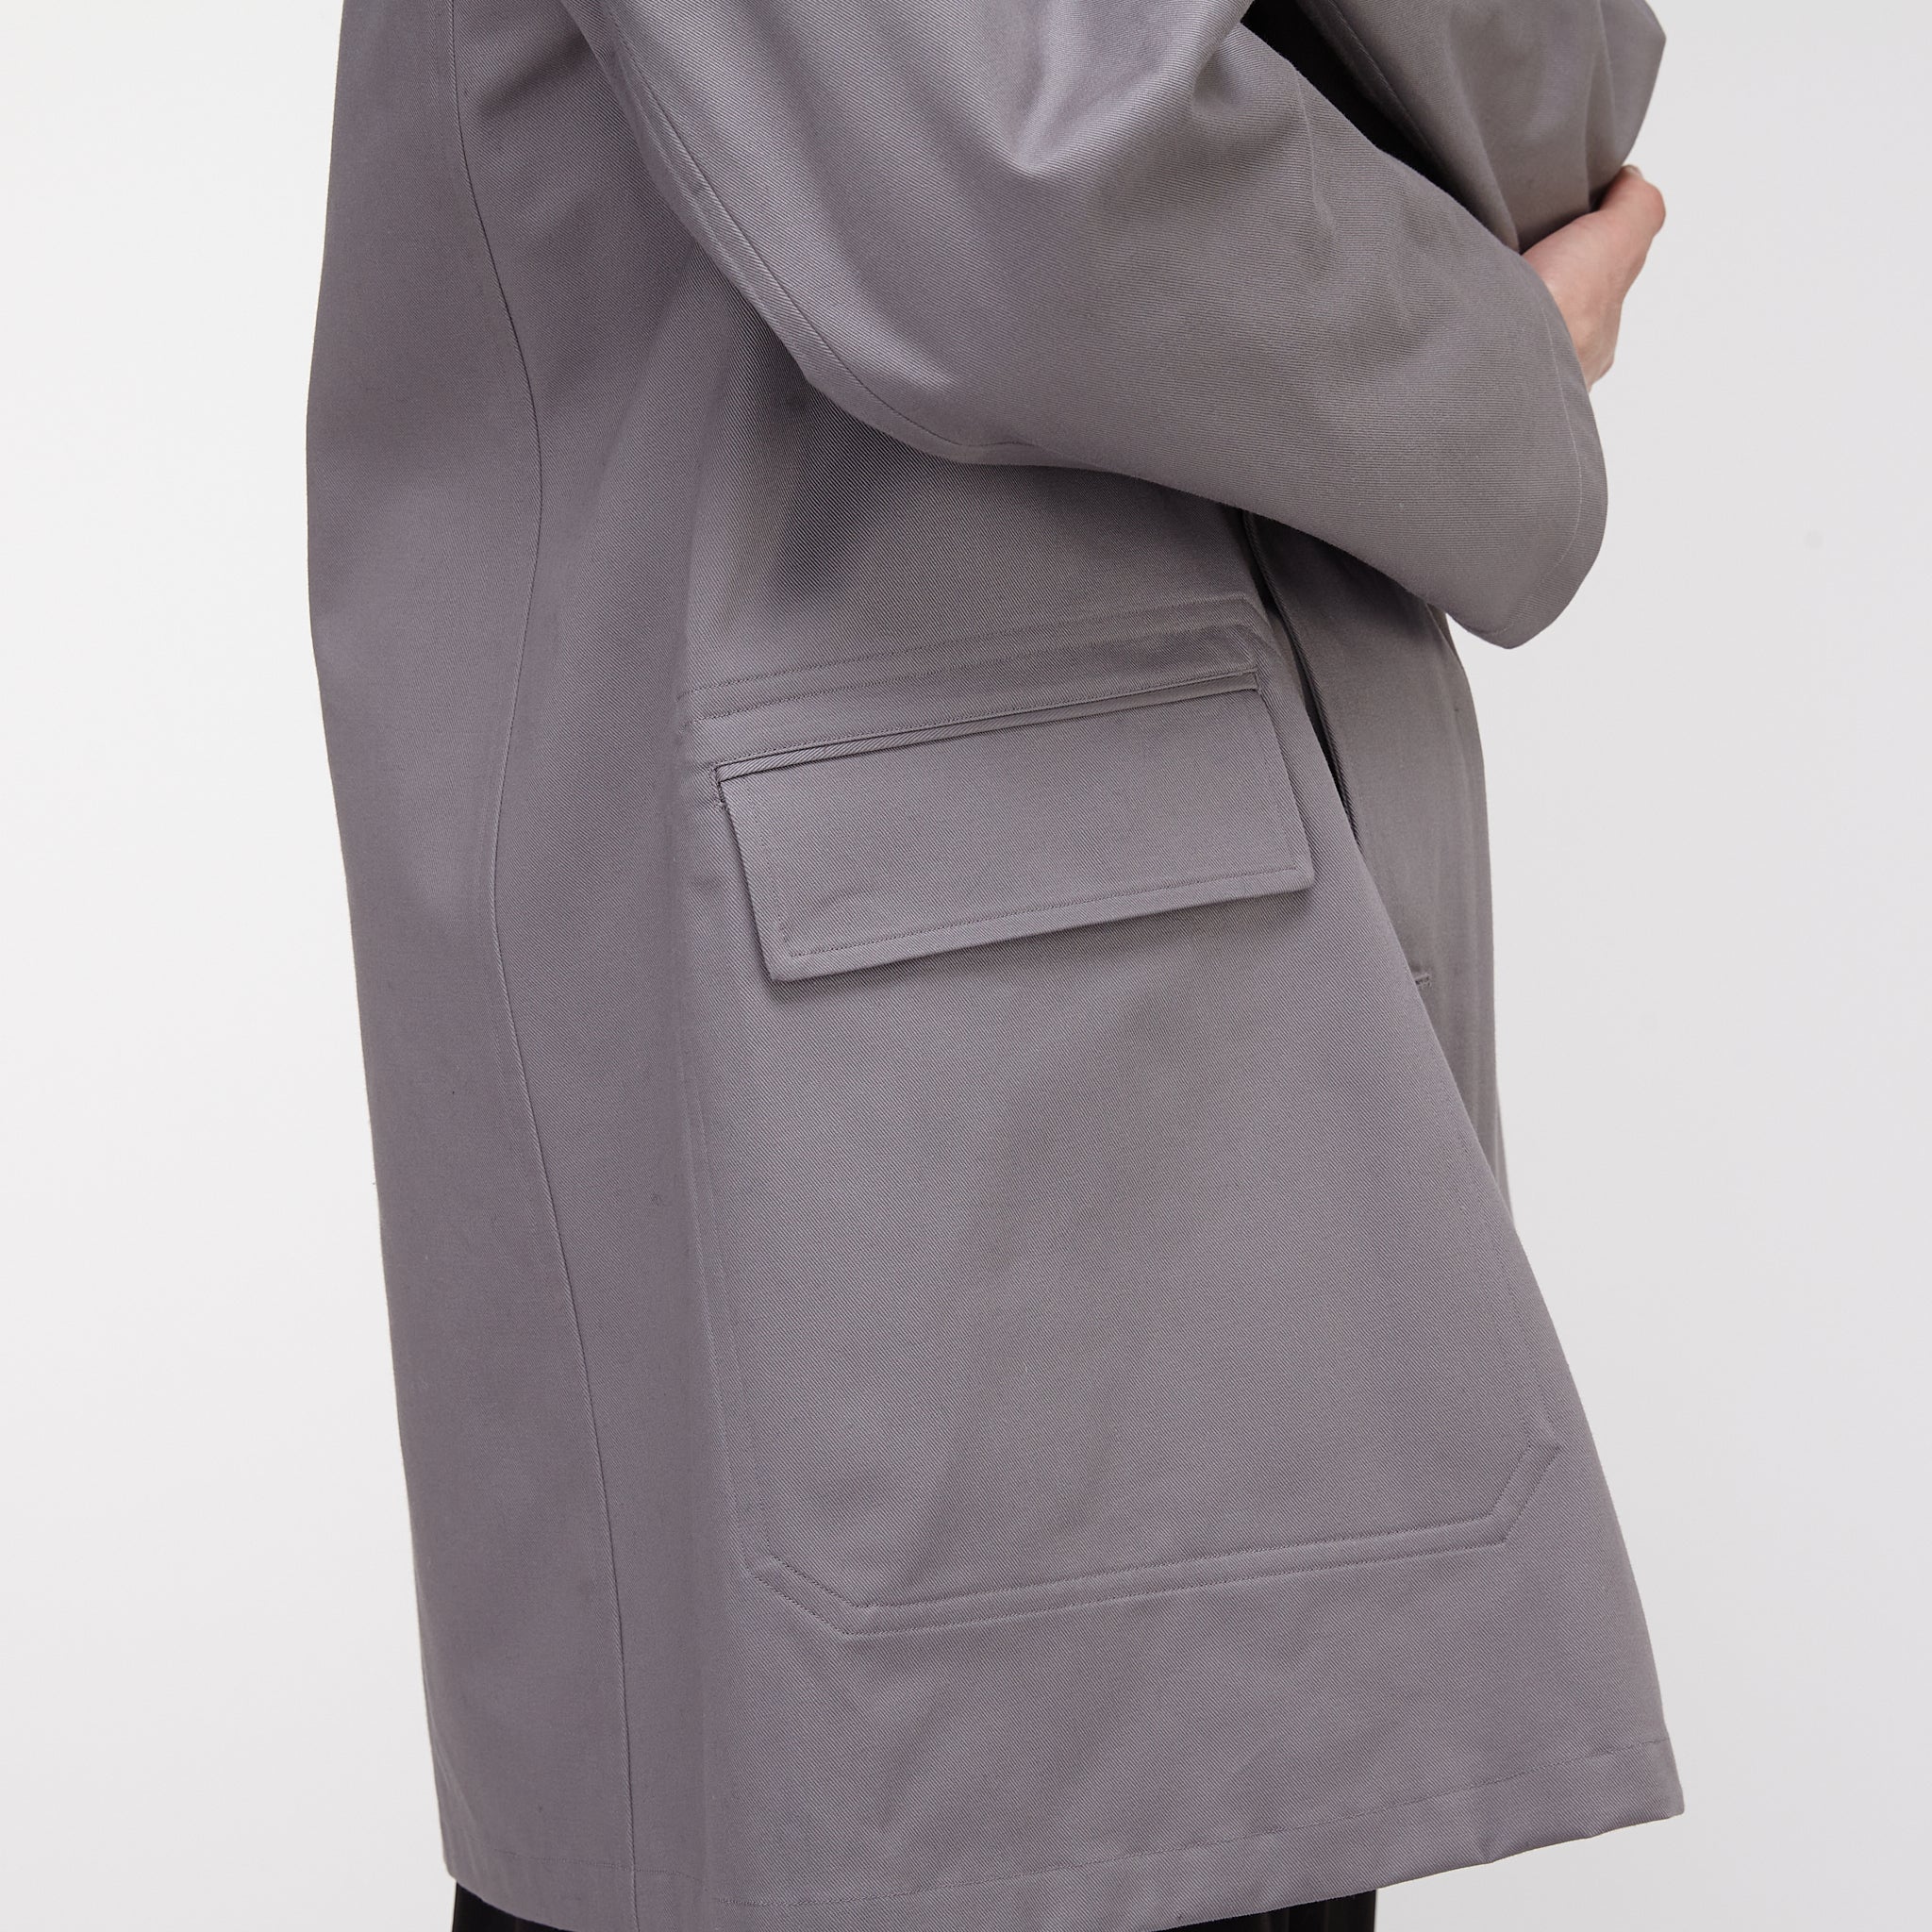 Reverberate long jacket セットアップ grey著用数回 | labiela.com